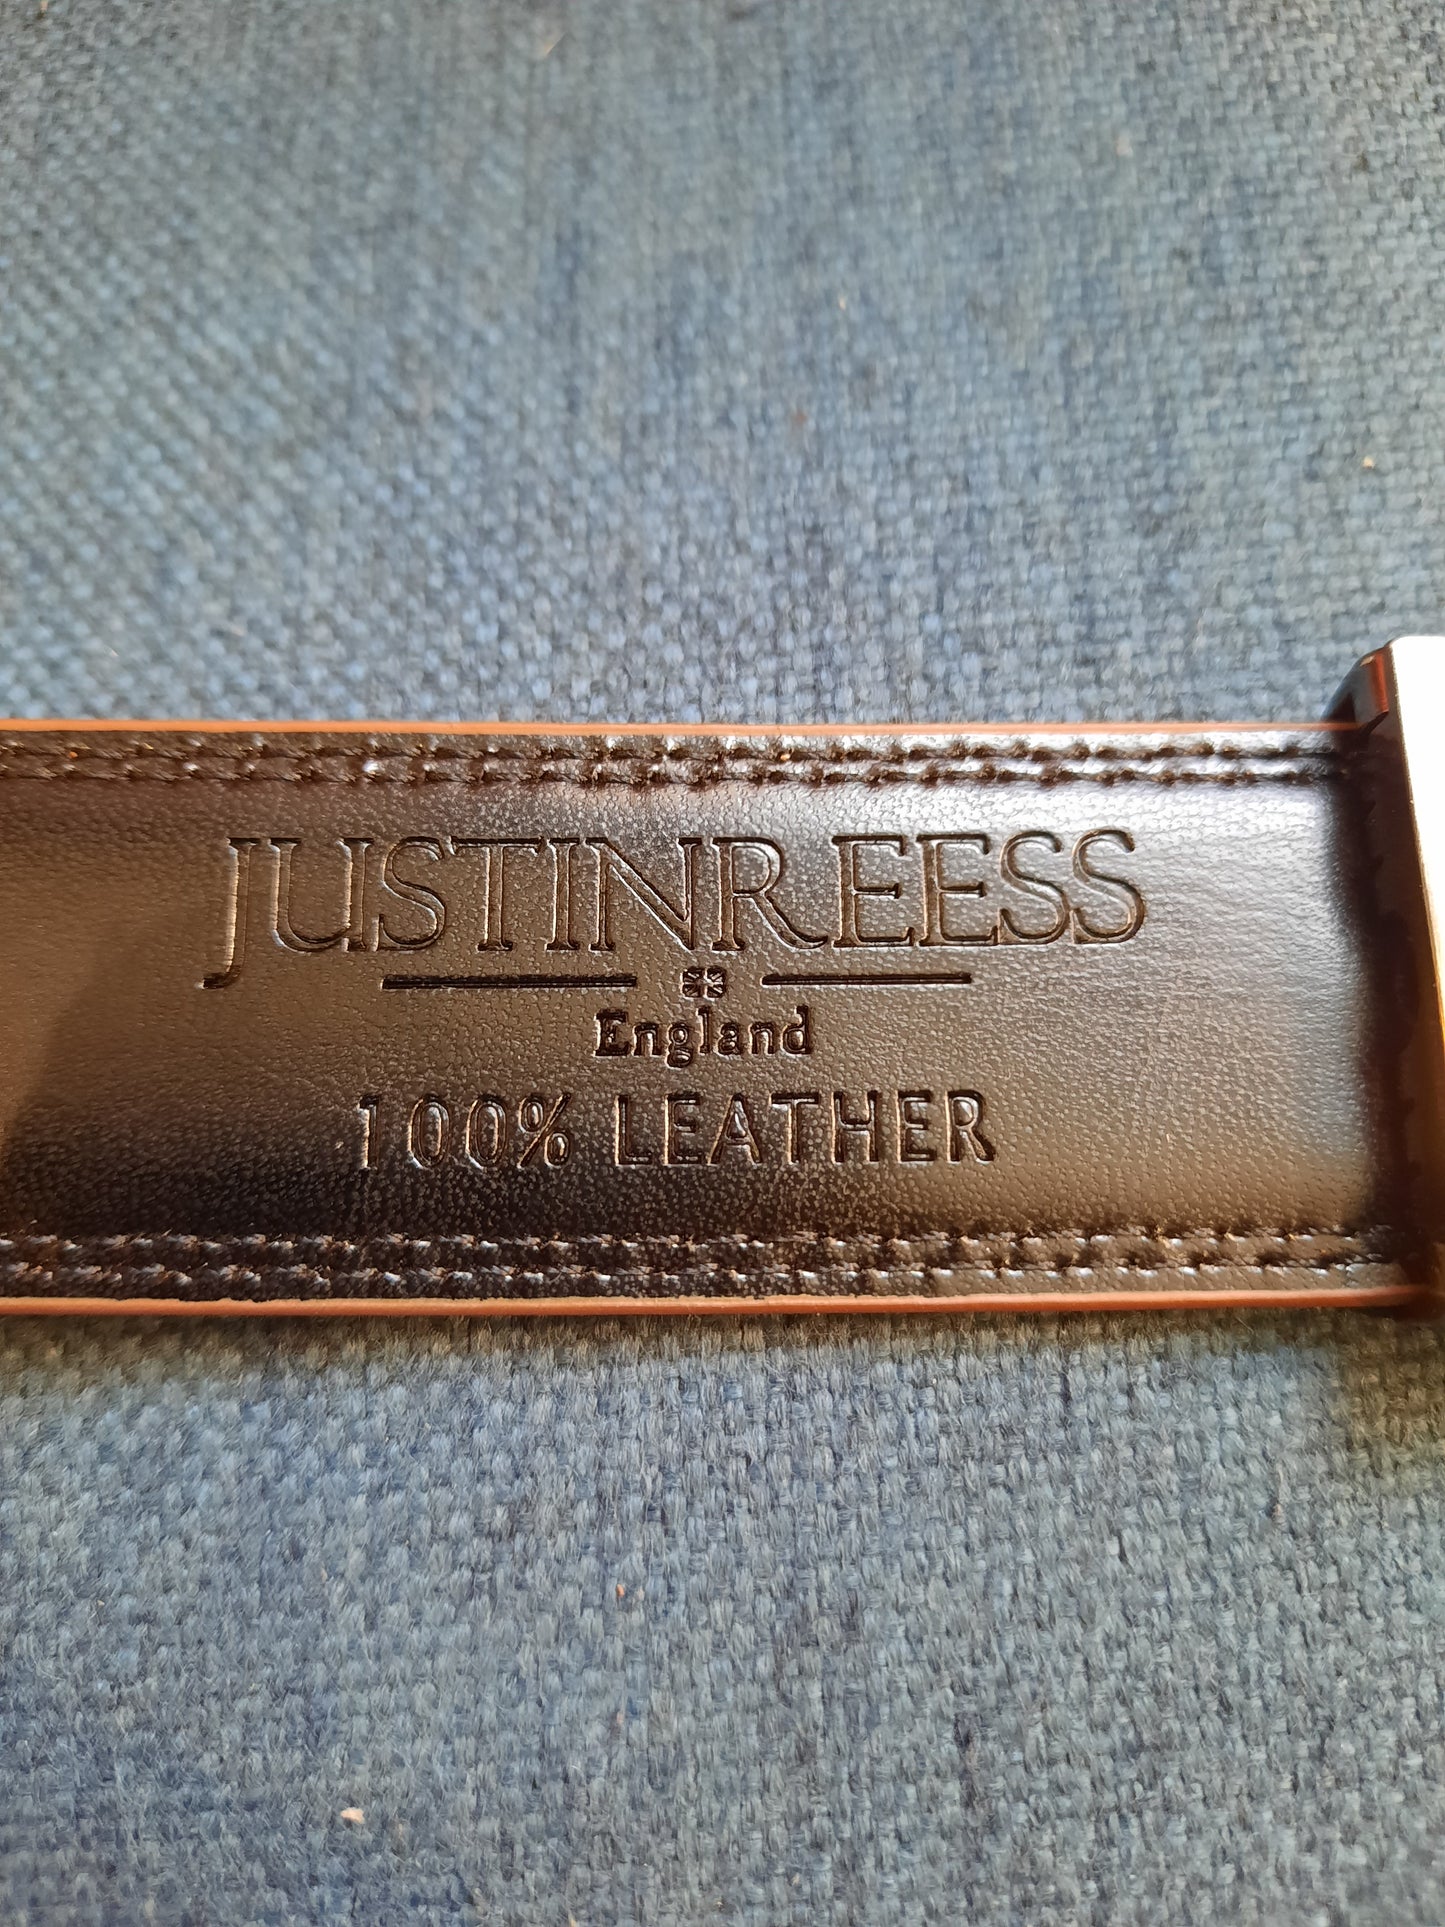 Justin Reess reversible leather belt